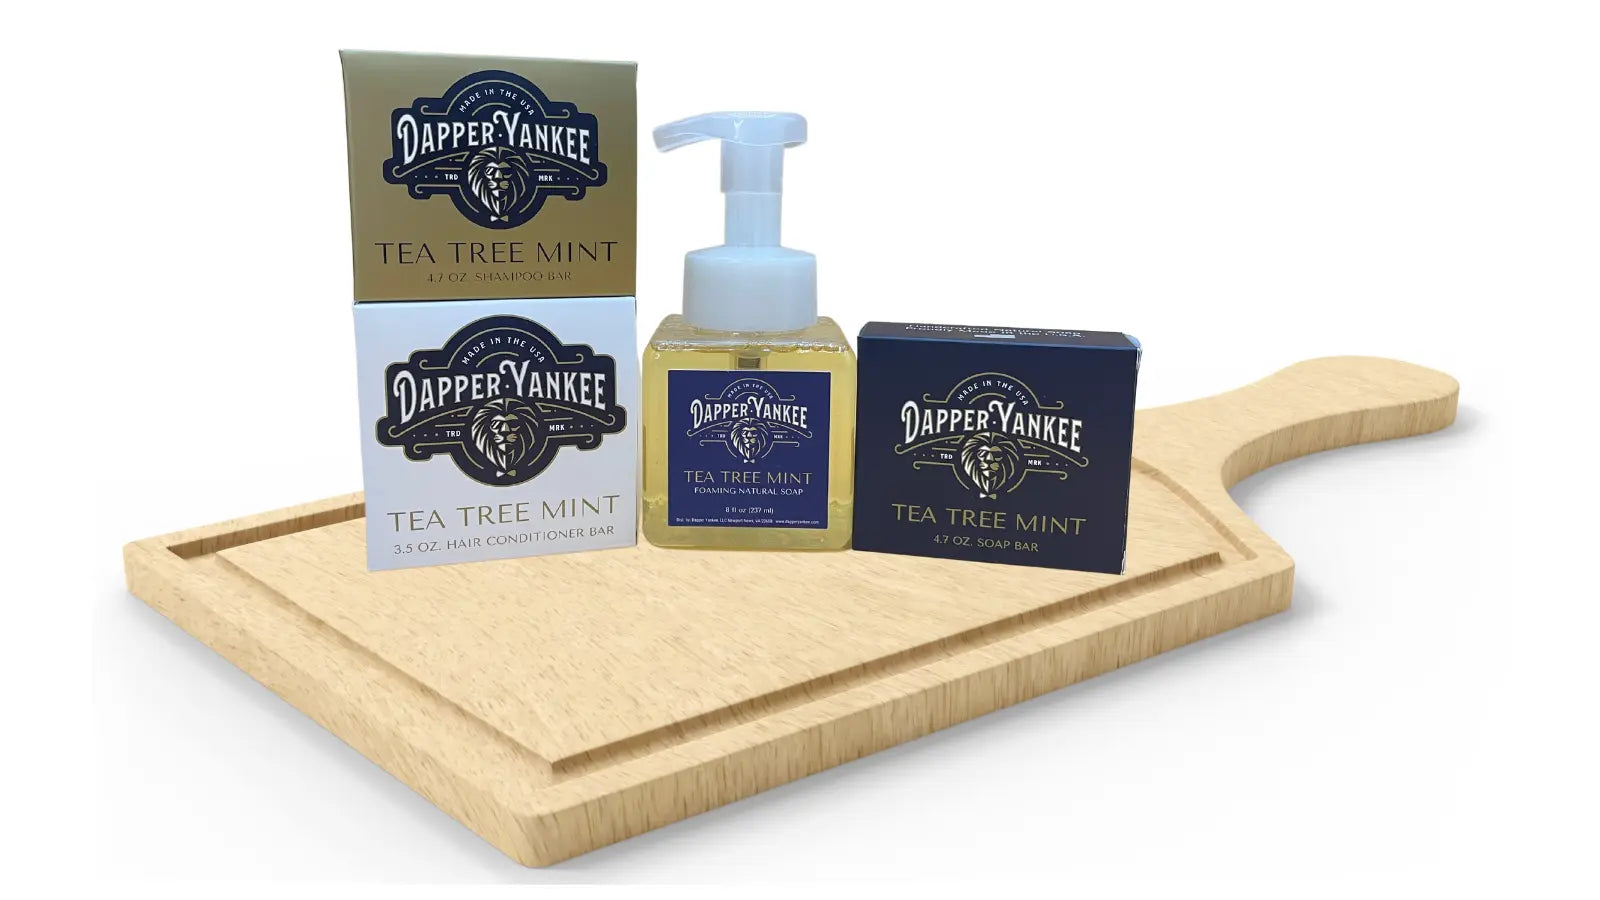 Dapper Yankee Tea Tree Mint Soap Review: A Premium, Natural Alternative to Your Current Soap